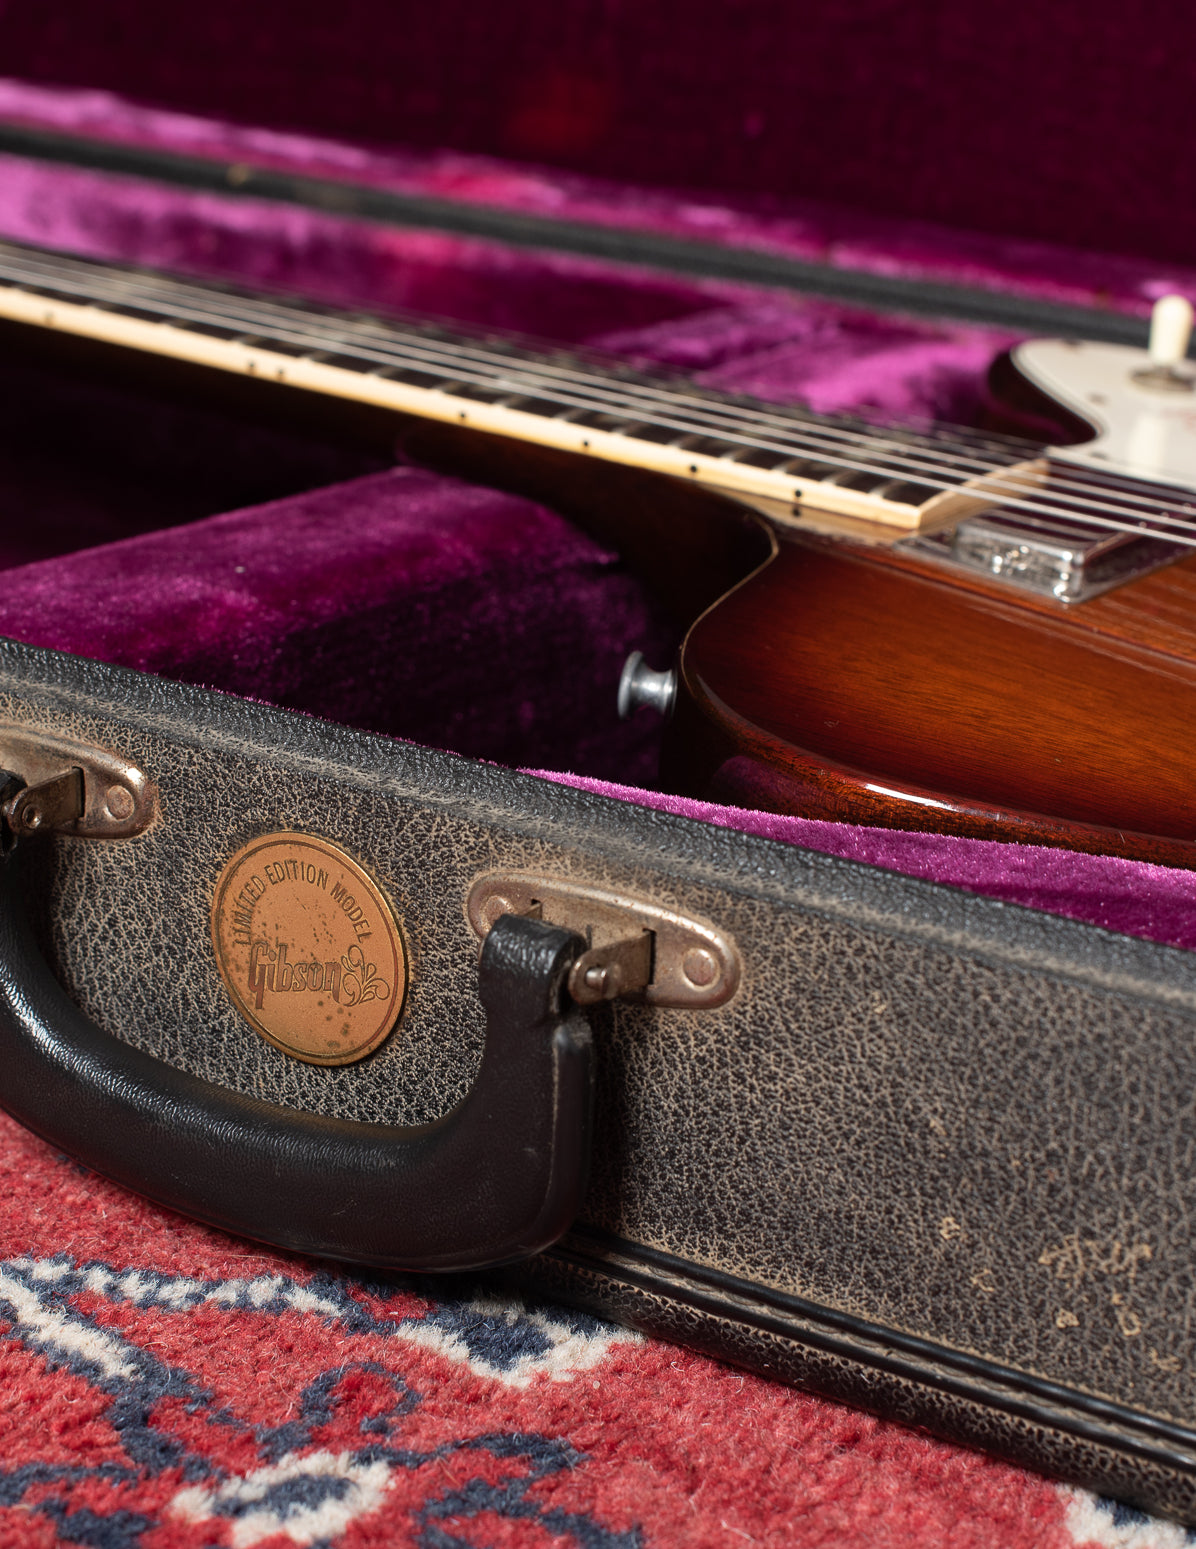 Limited Edition Model case Gibson Firebird